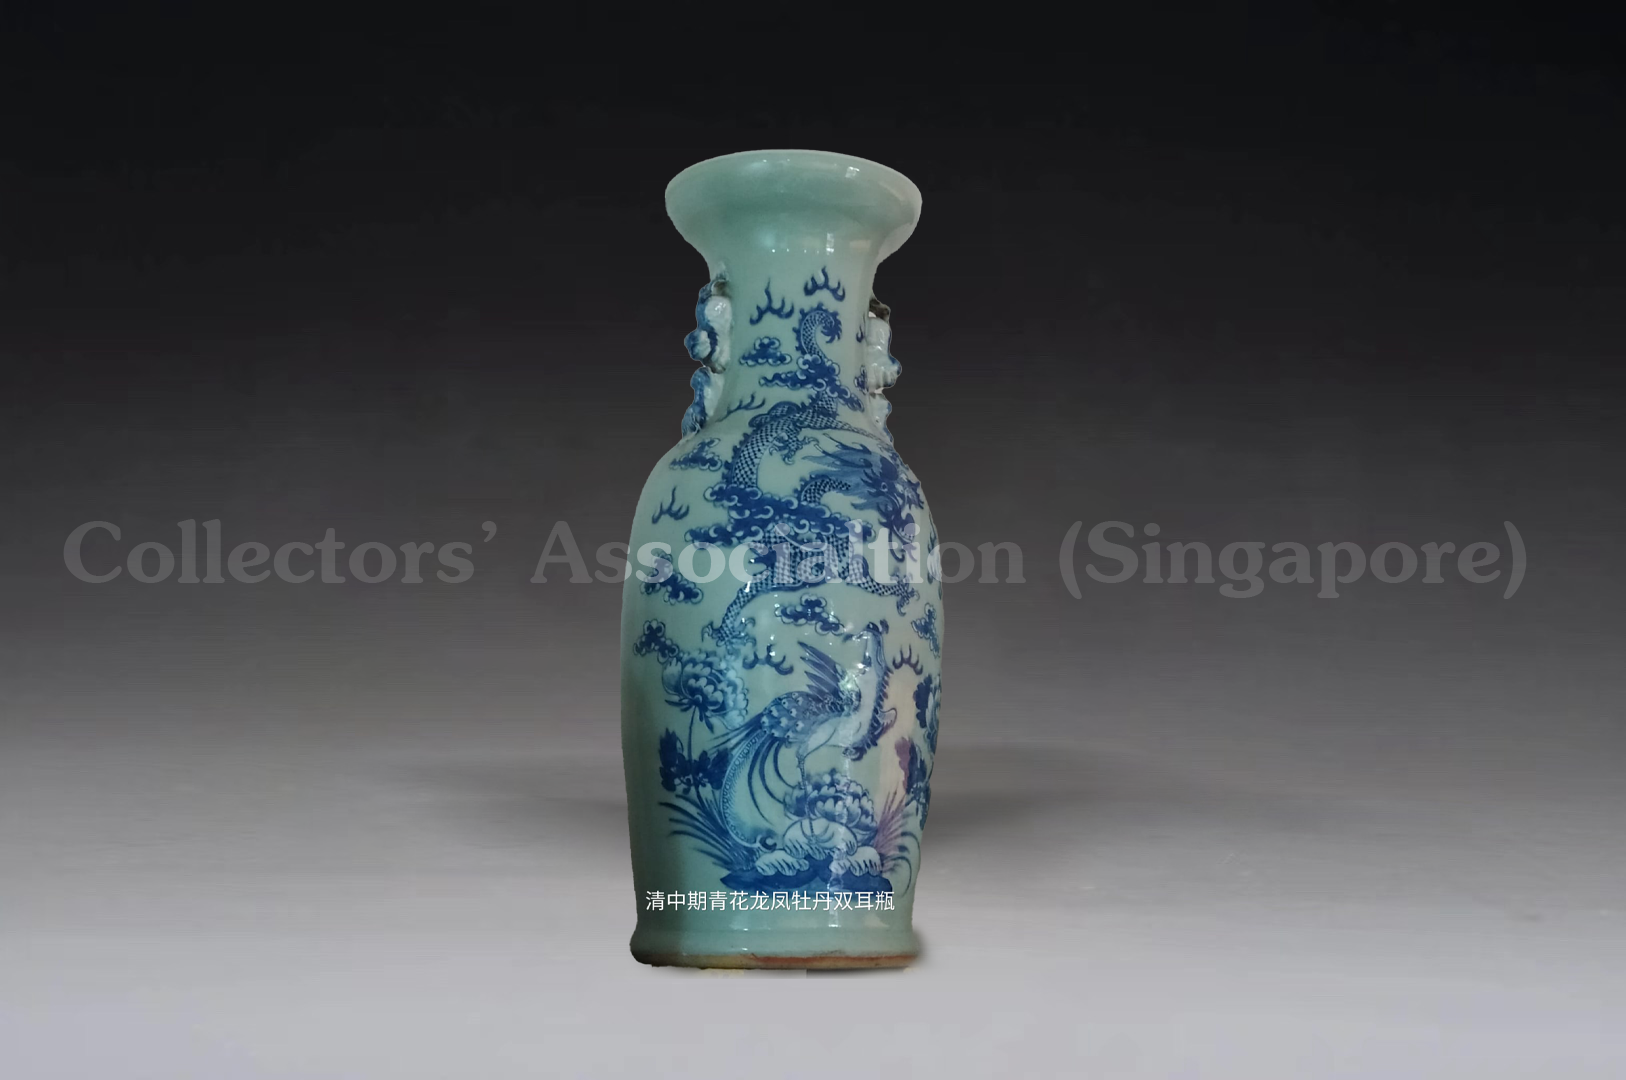 青花龙凤牡丹双耳瓶- Collectors' Association (Singapore)